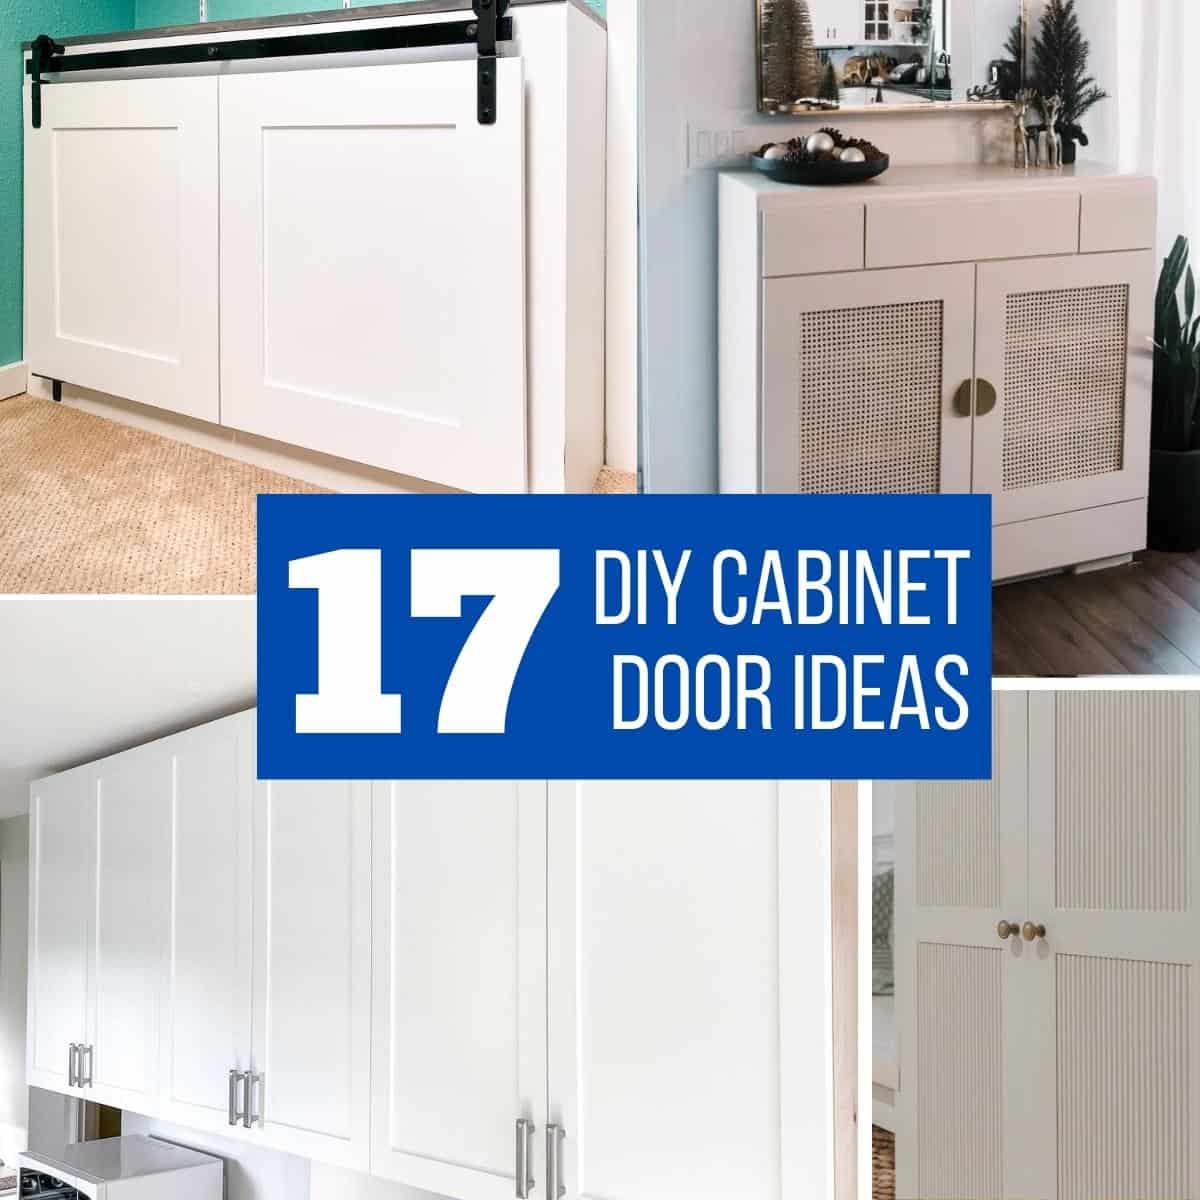 17 Easy DIY Cabinet Door Ideas On A Budget The Handyman S Daughter